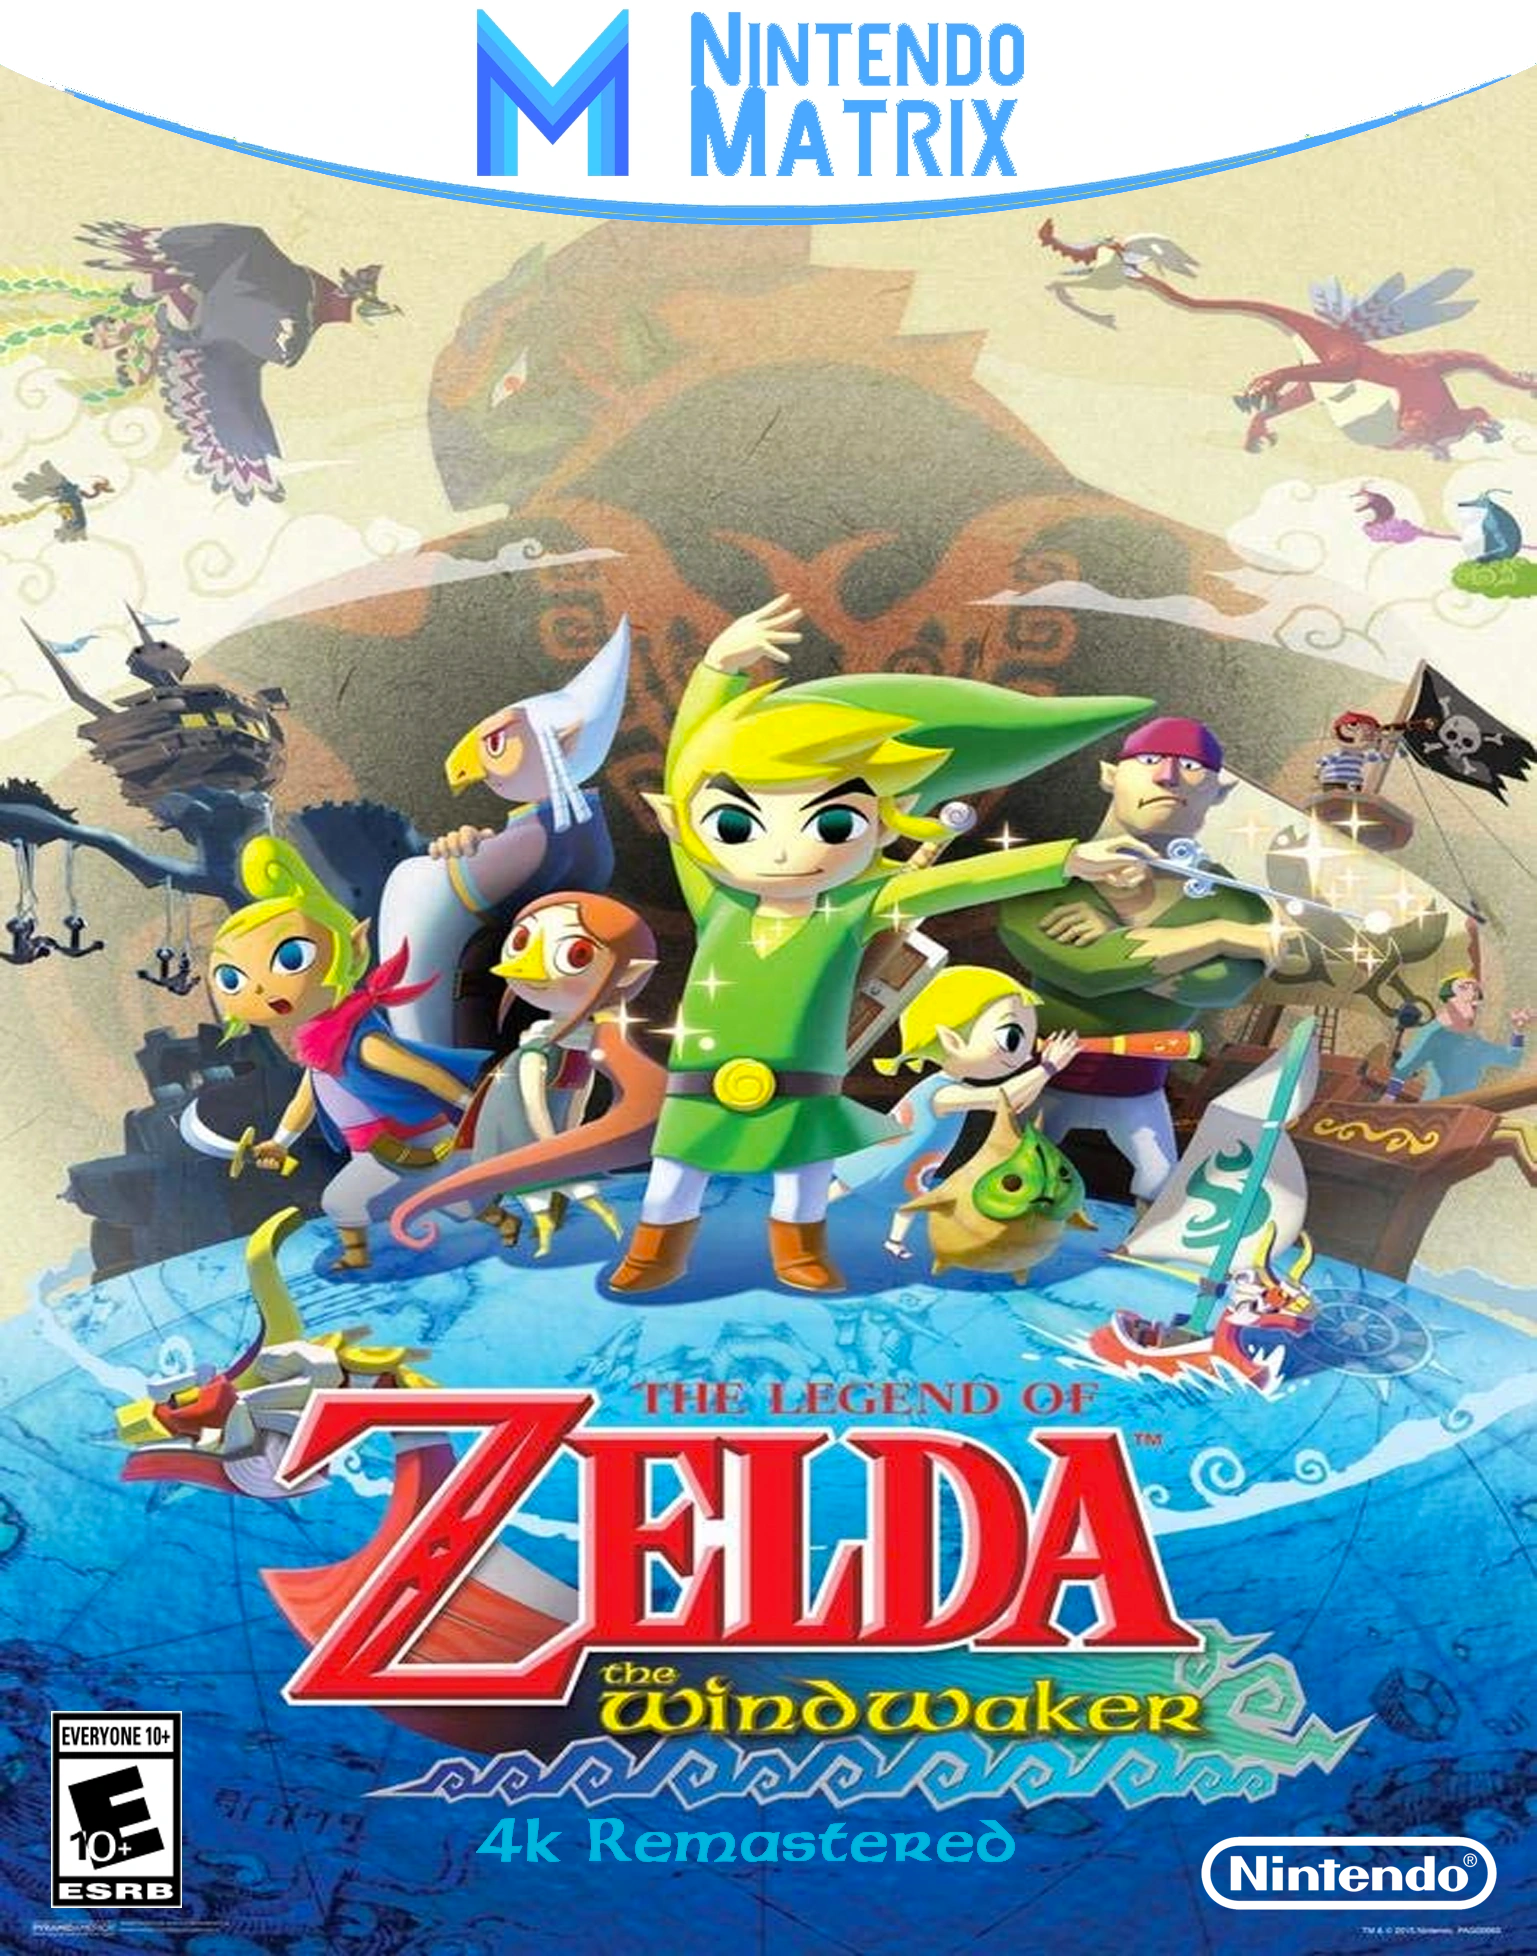 Nintendo Game cube Legend of Zelda The Wind Waker Japanese version NEW